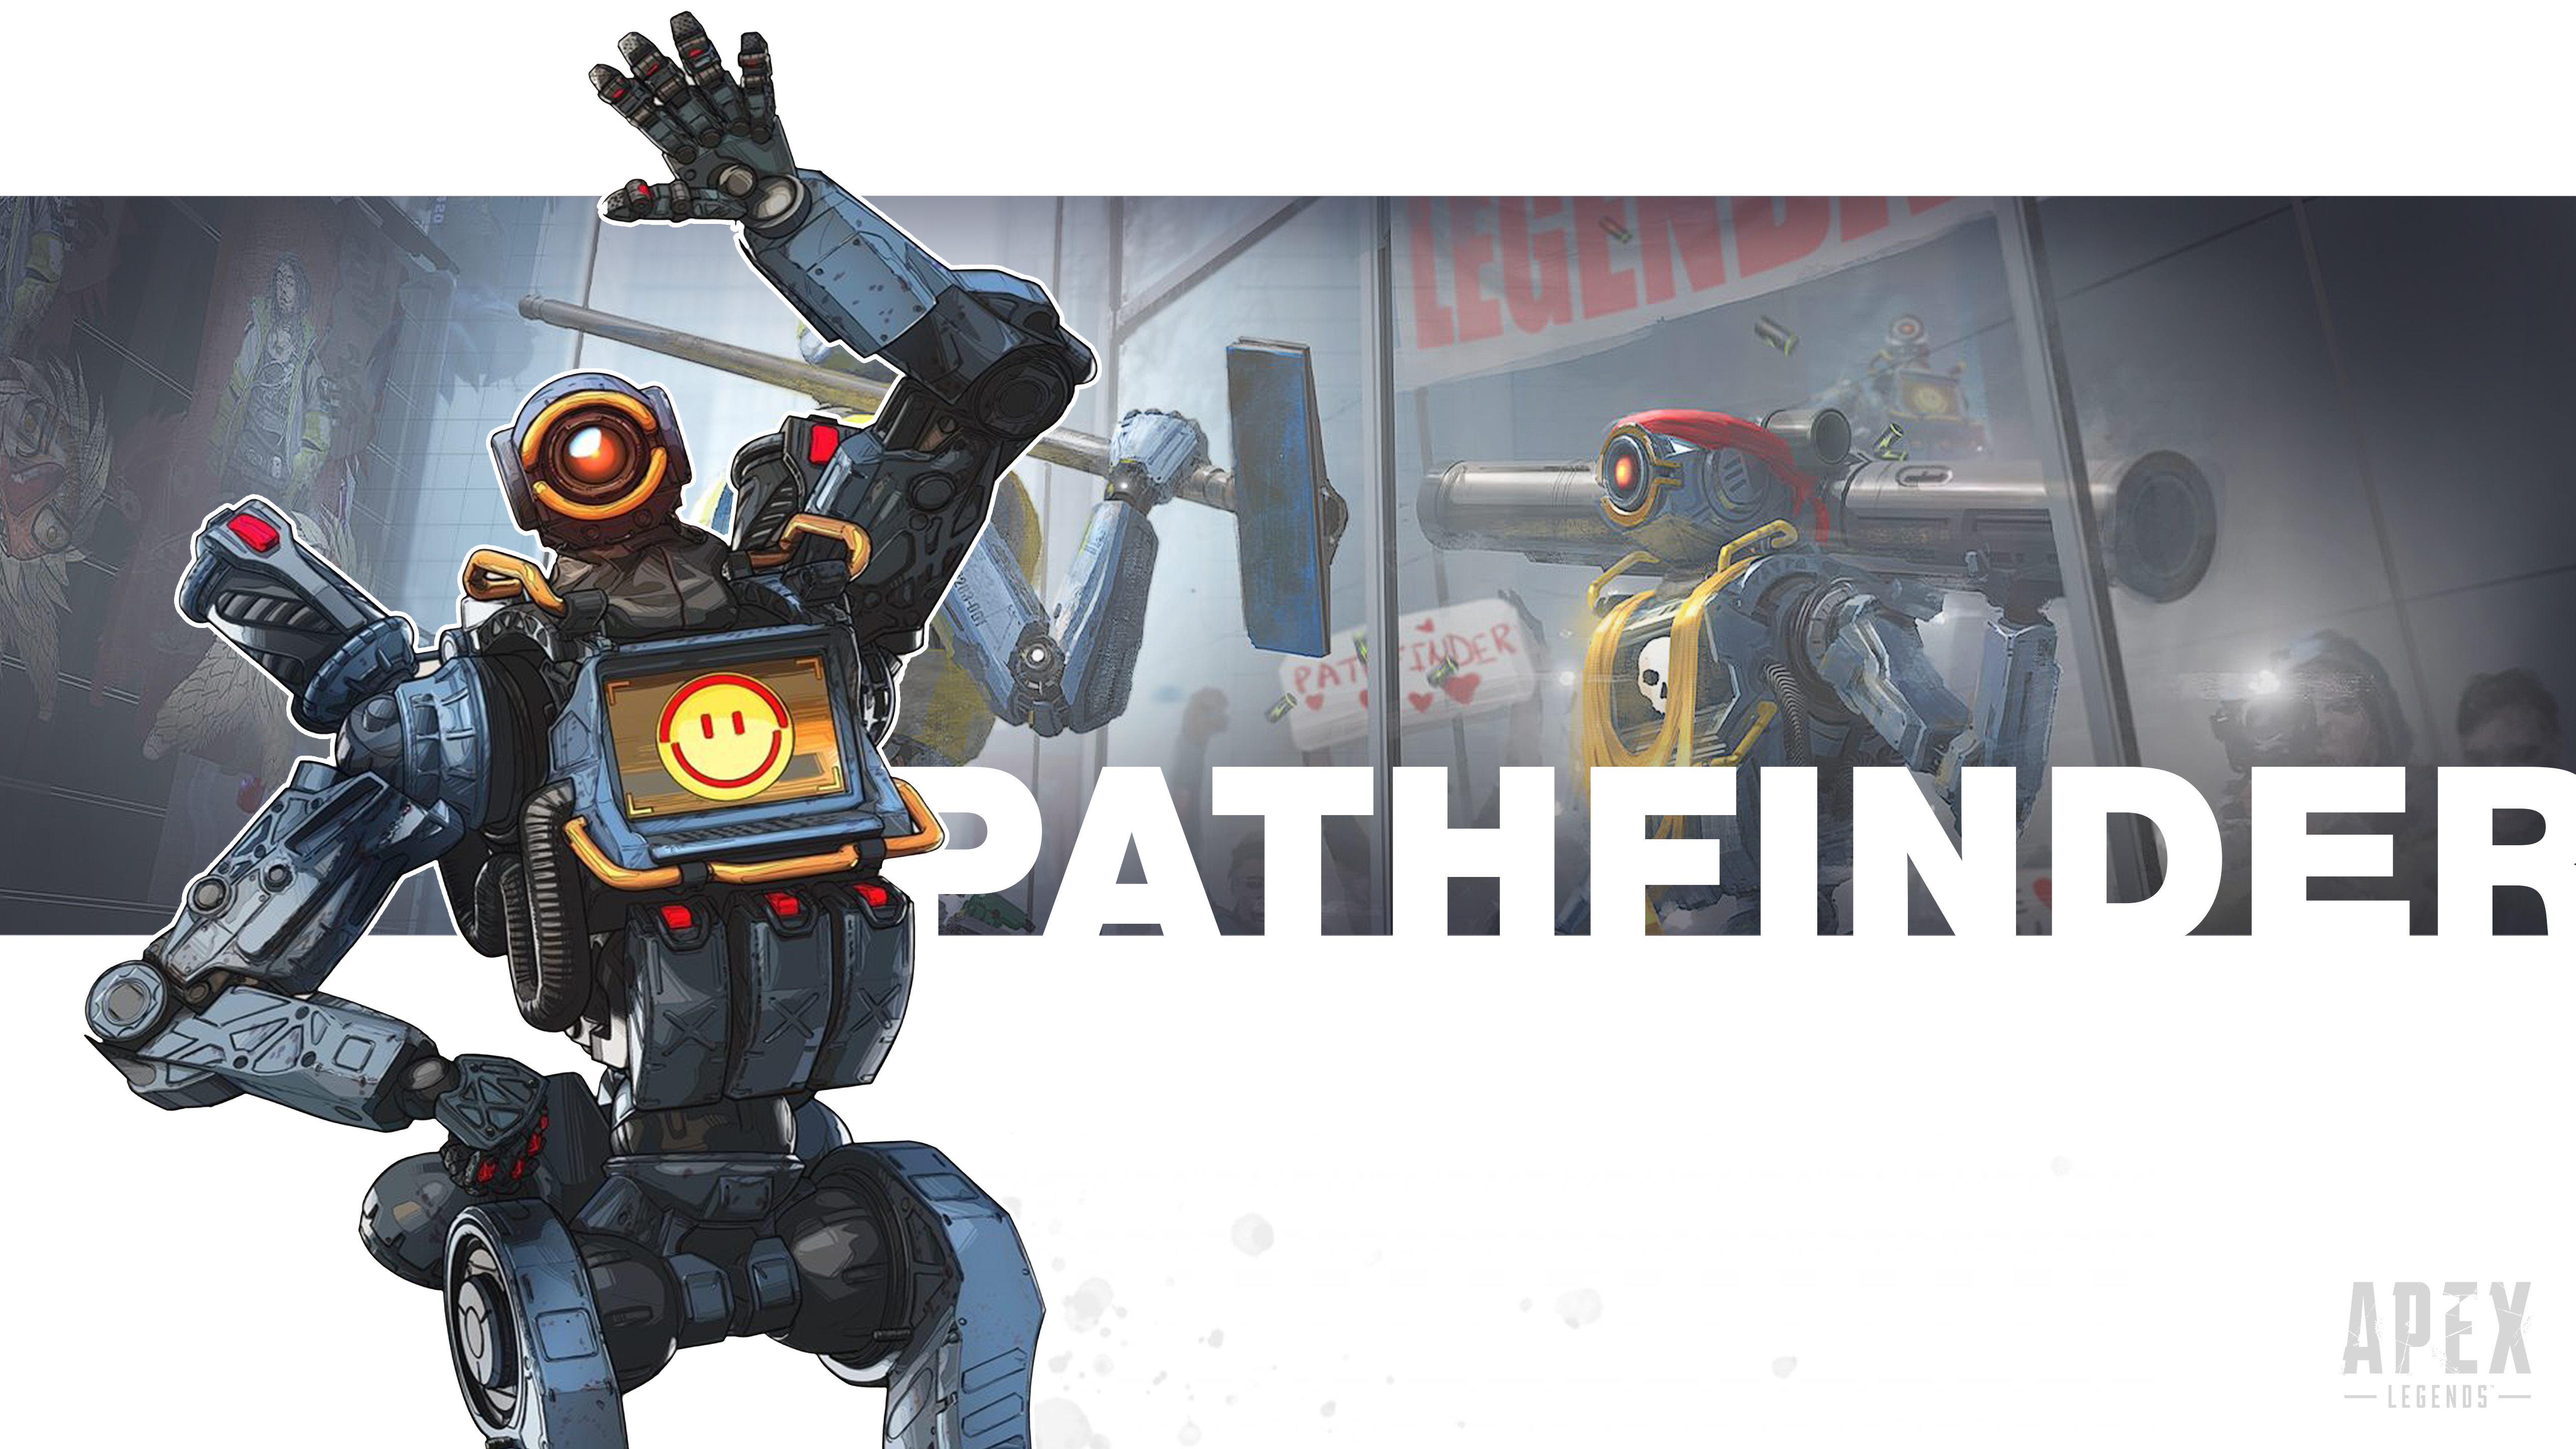 Pathfinder Apex Legends Hd Wallpaper Backgrounds Download